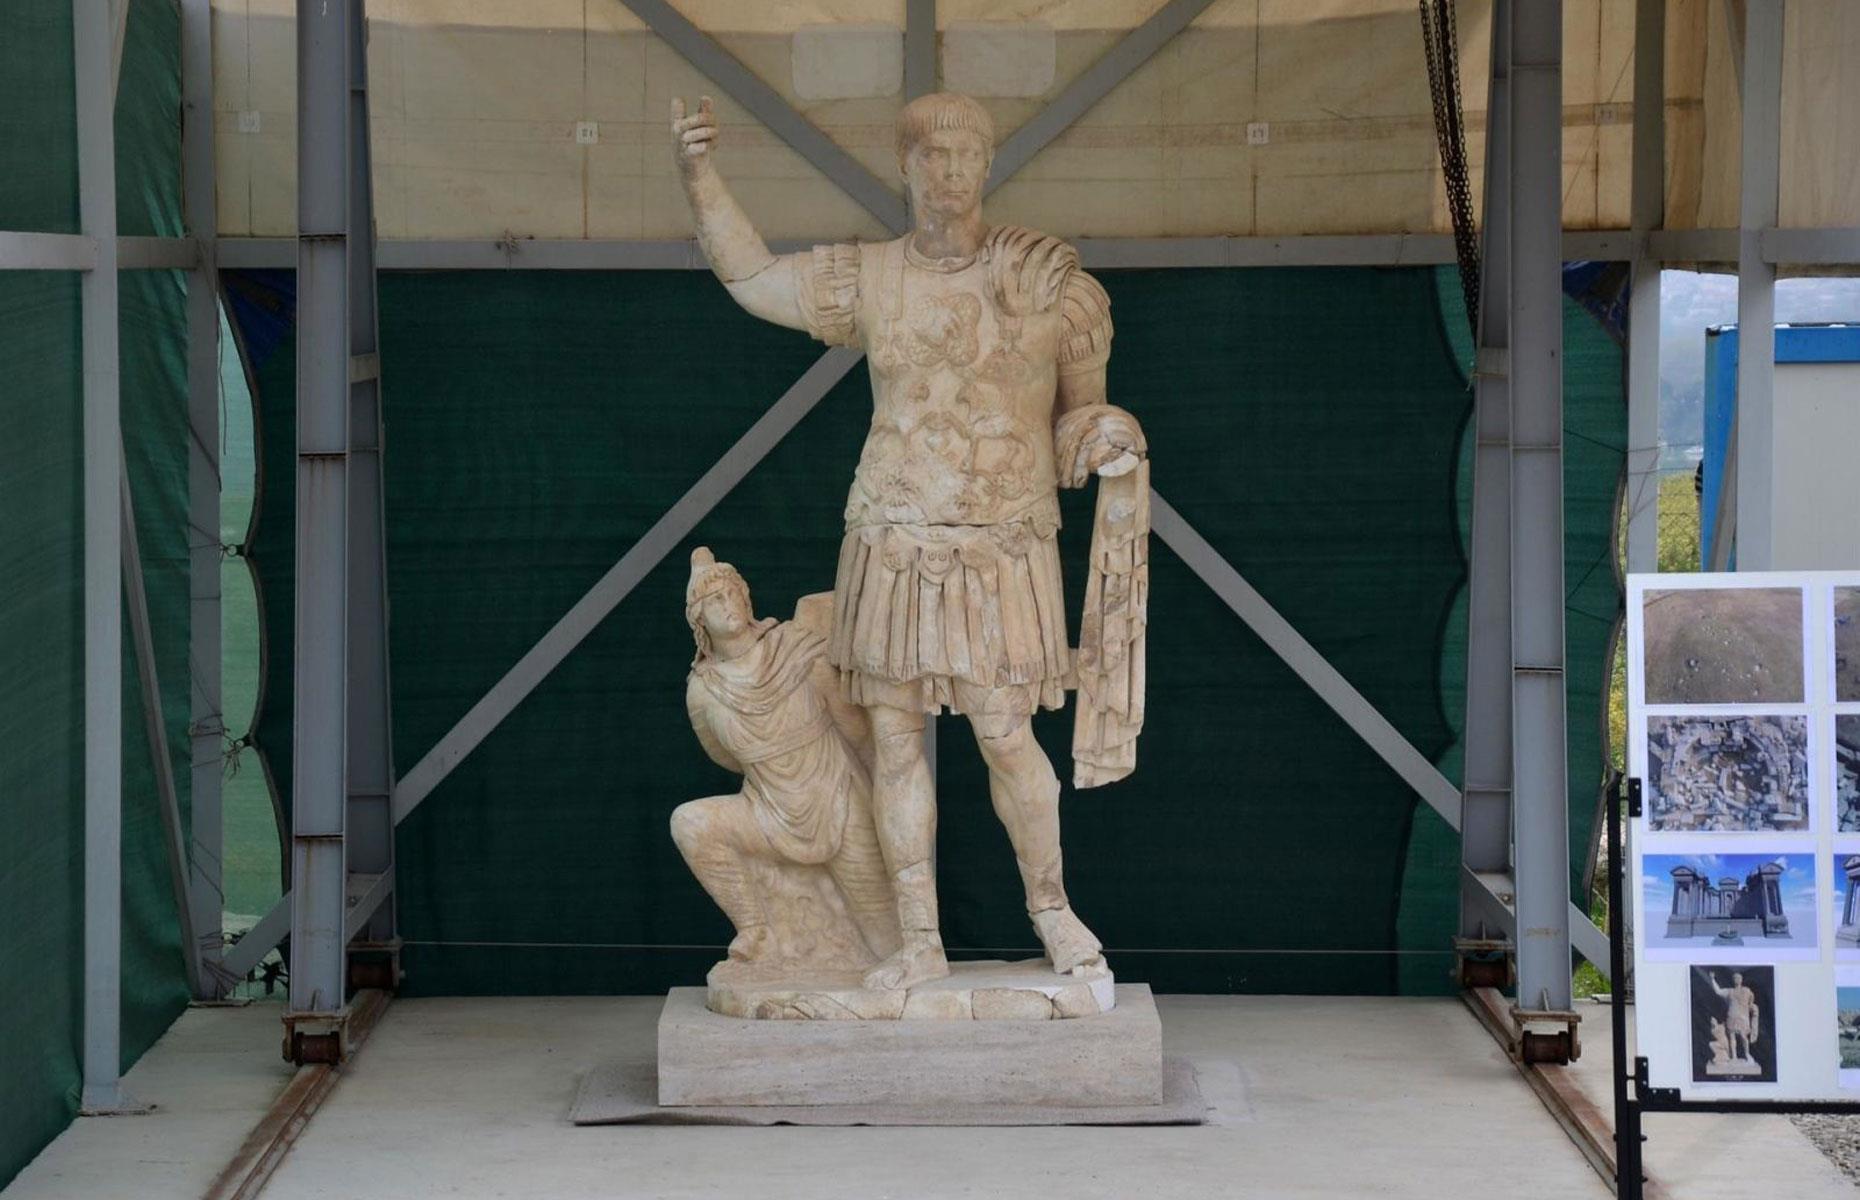 2019: The 10-foot statue of Emperor Trajan